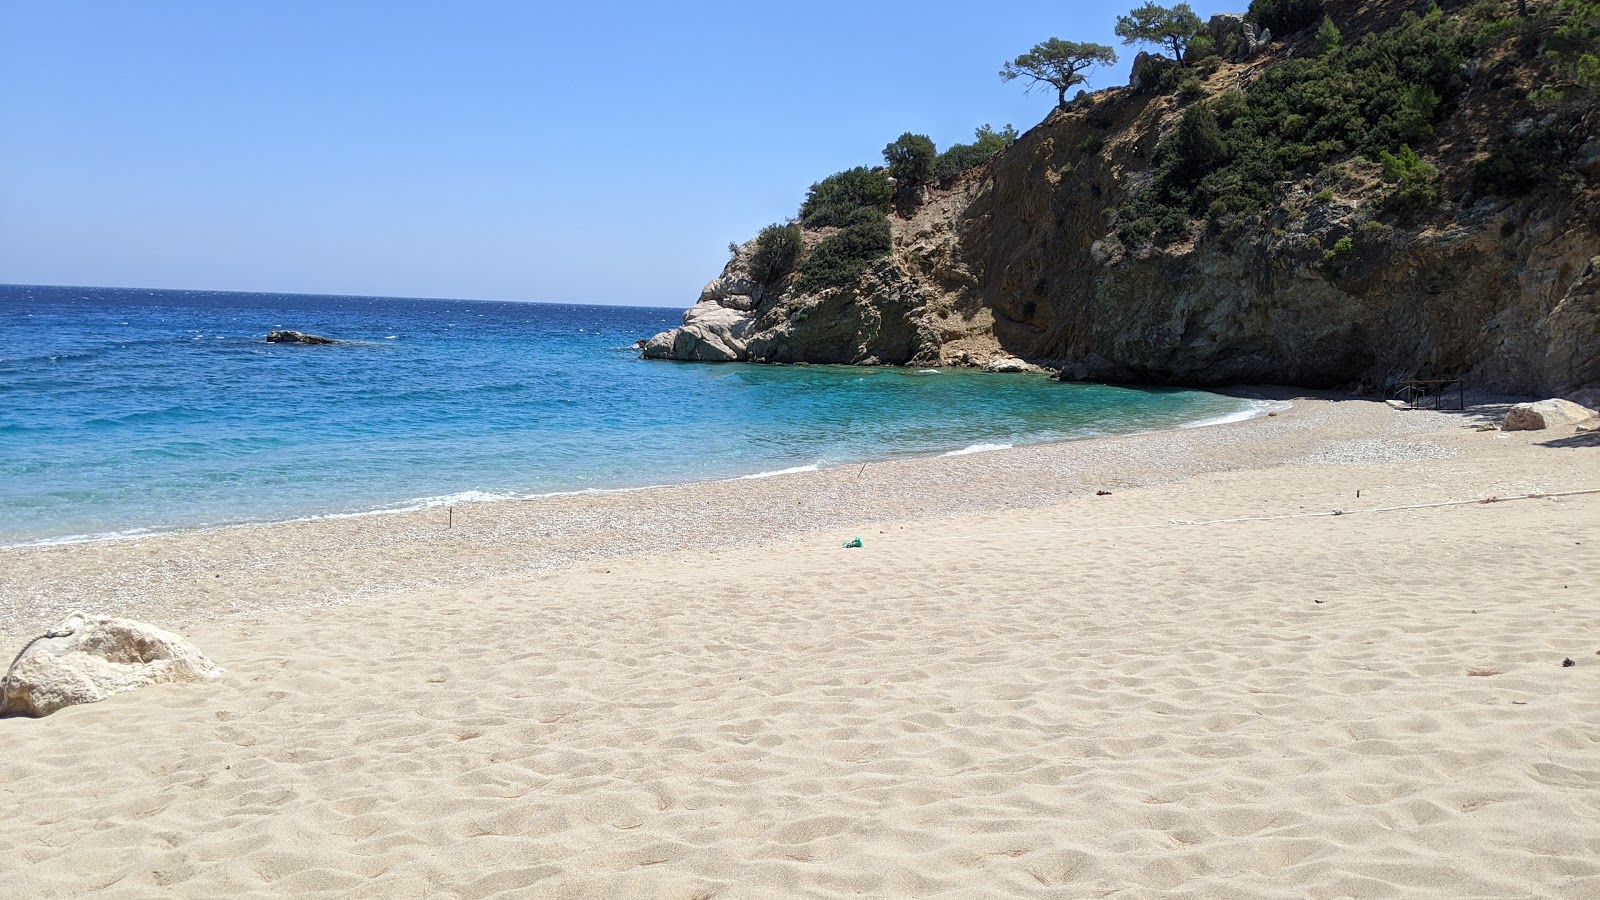 Photo of Apella beach and its beautiful scenery